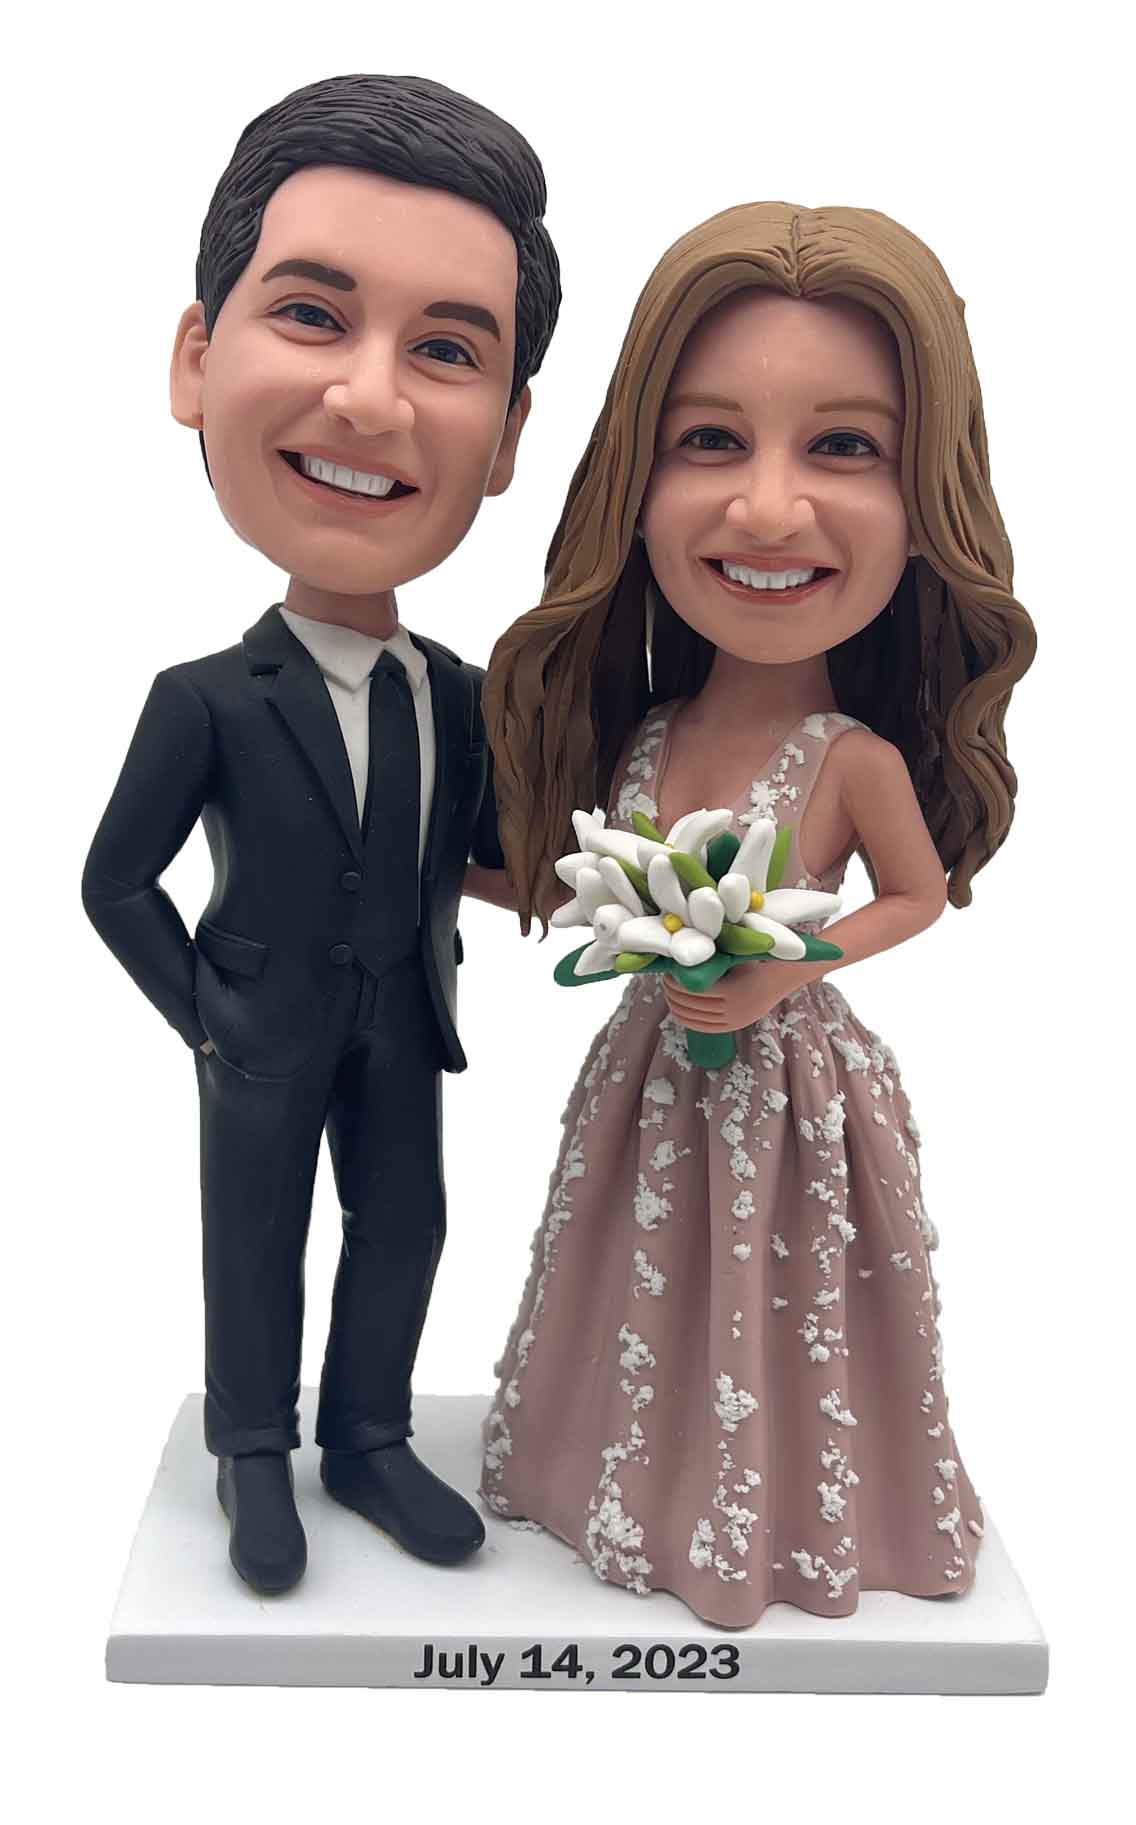 Create your own wedding cake topper Custom wedding figurines